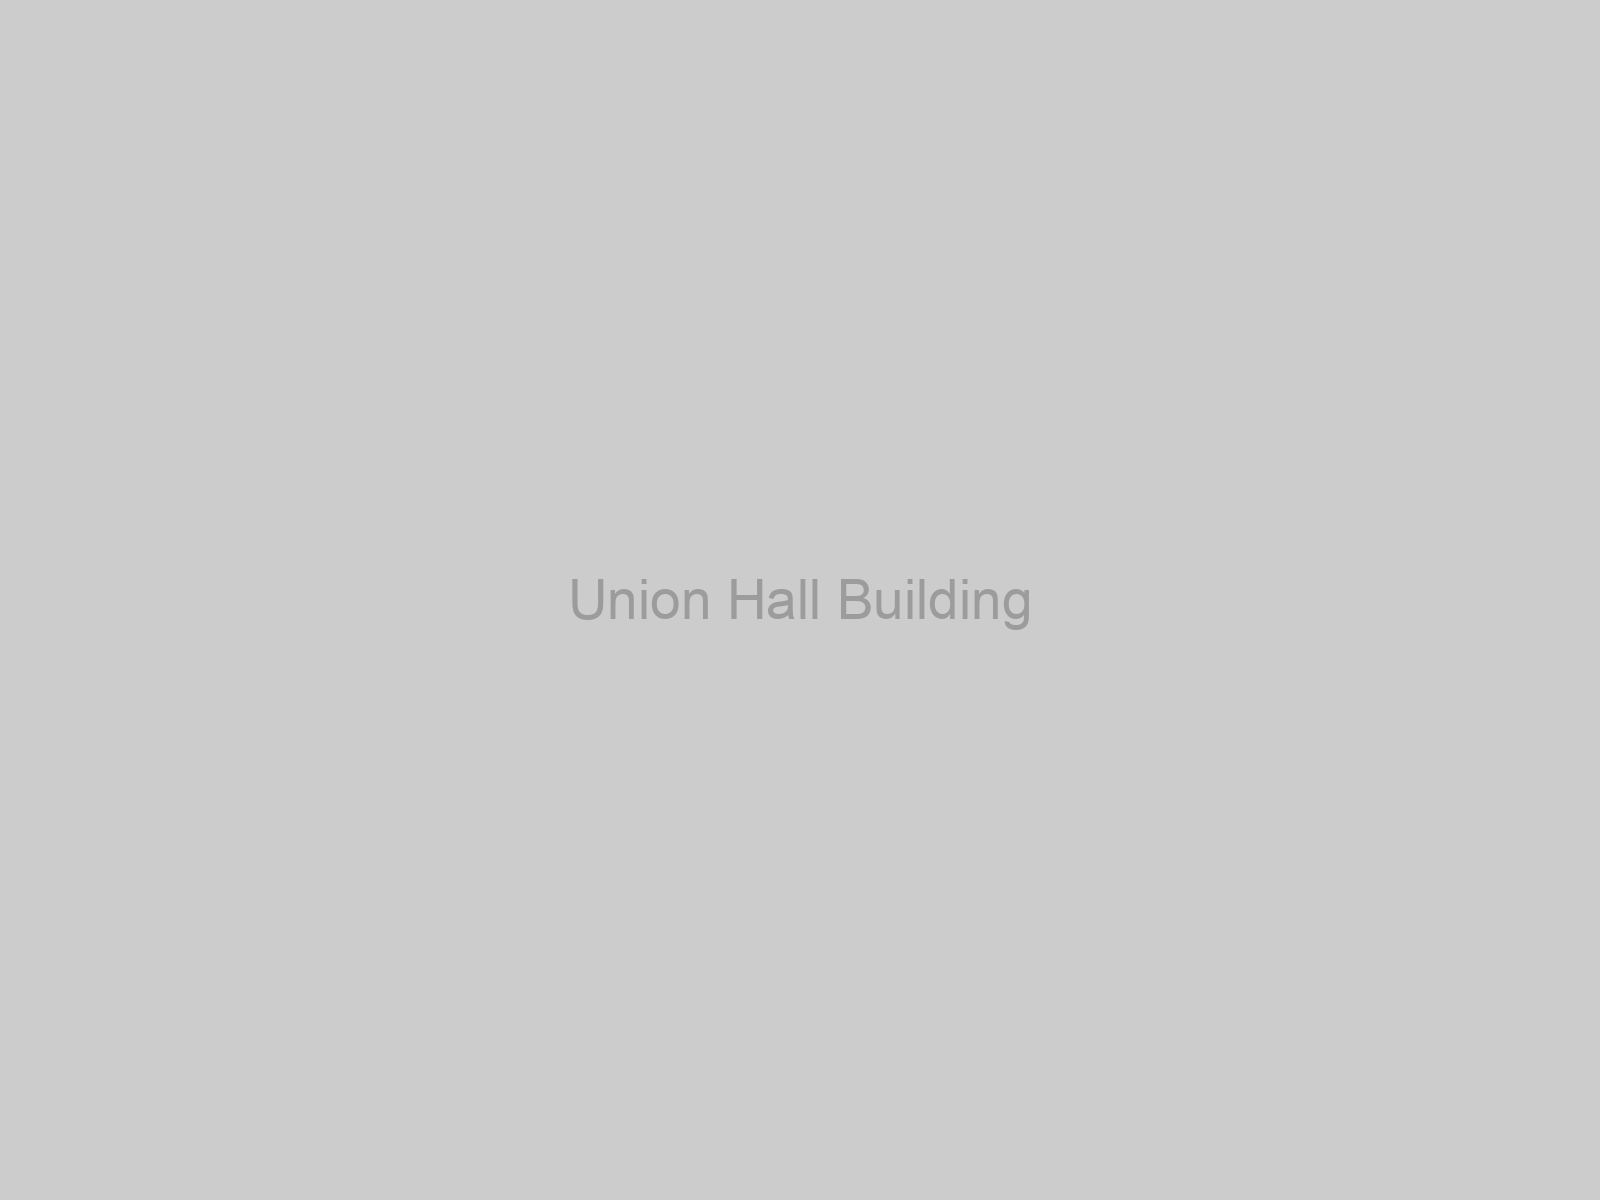 Union Hall Building